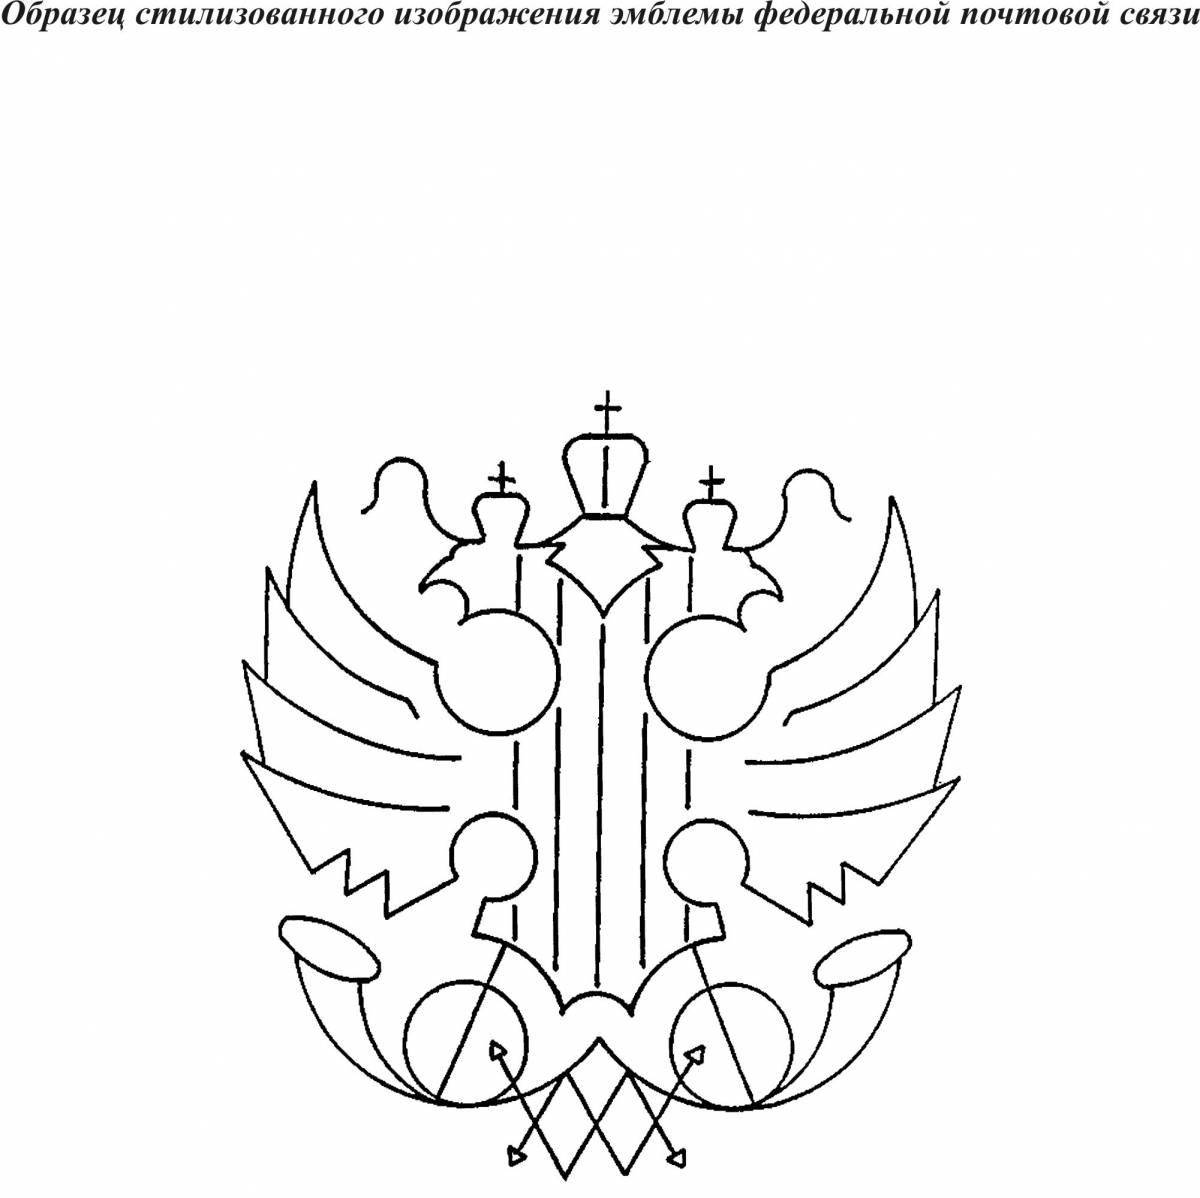 Luminous coat of arms of Russia for preschoolers